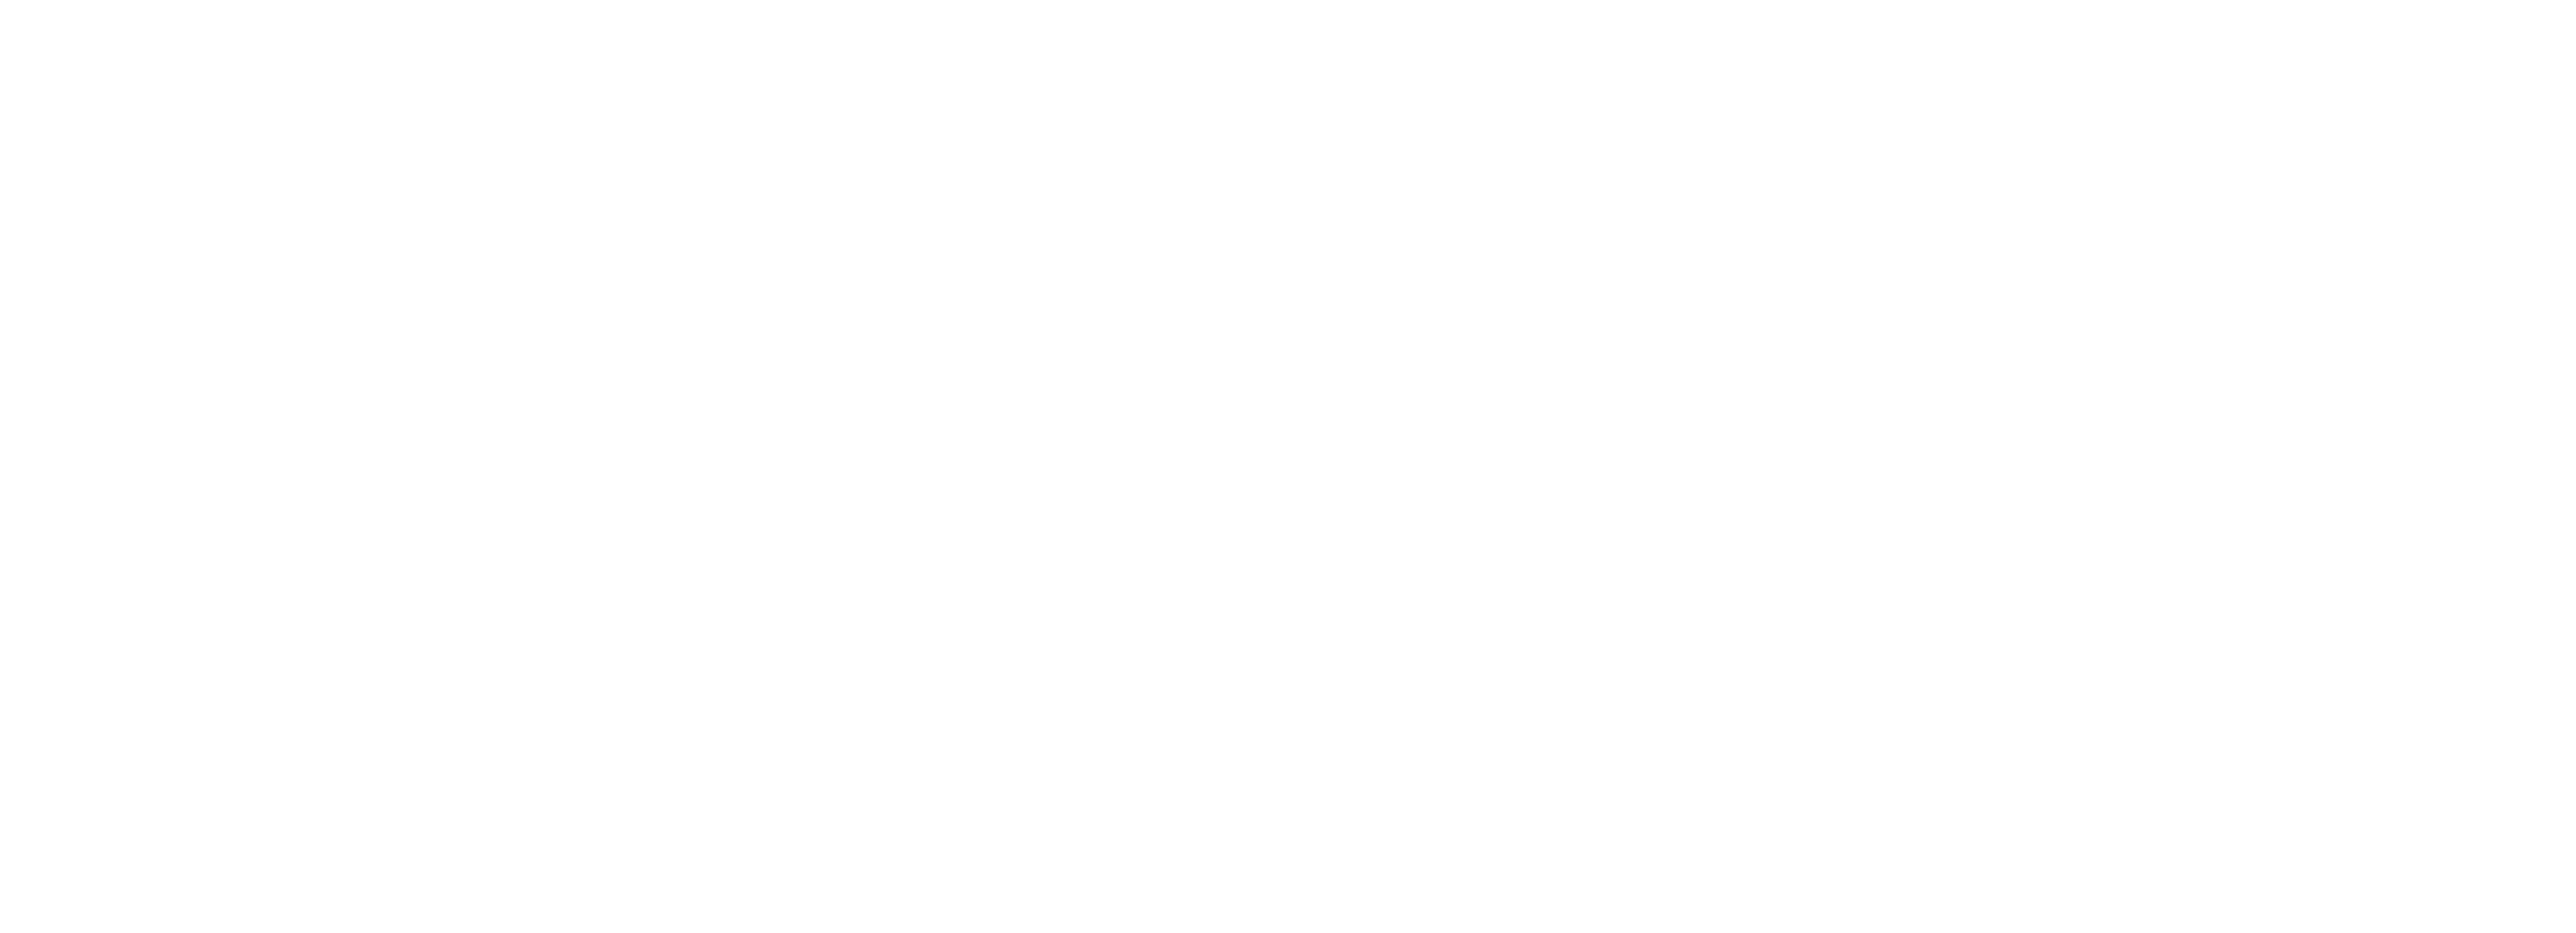 Amsterdam Data Collective logo